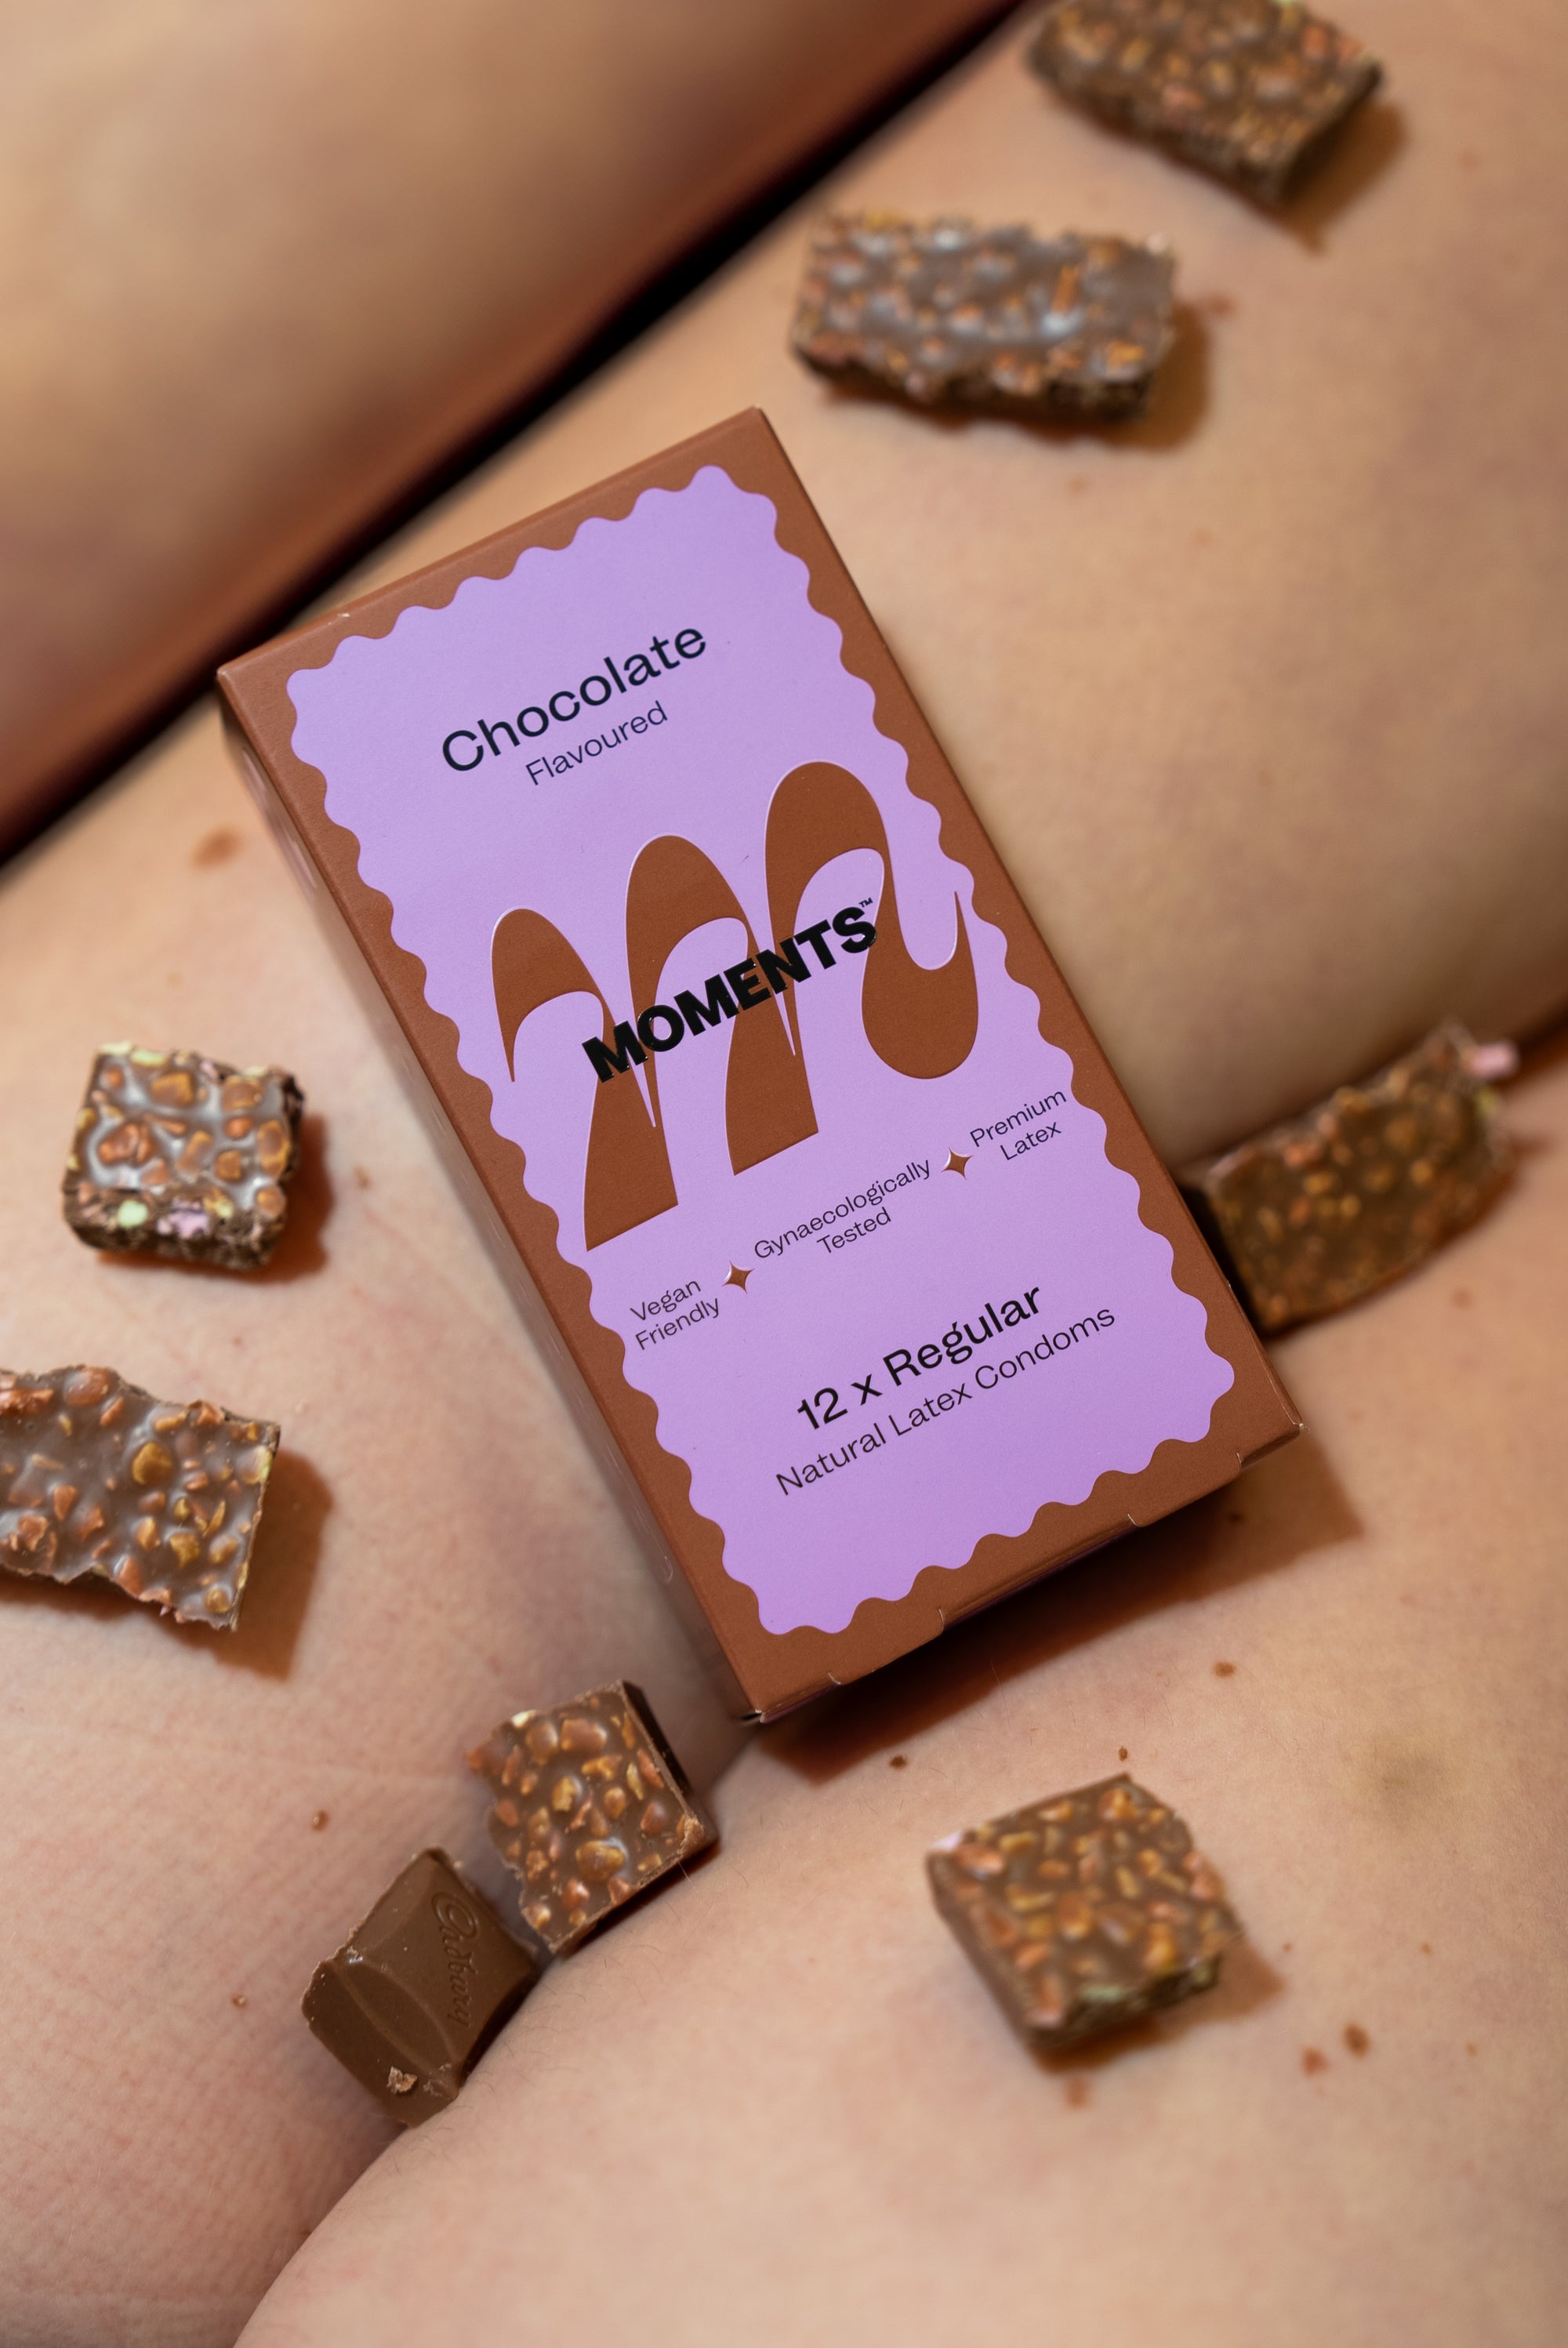 Chocolate flavoured condom for enhanced pleasure